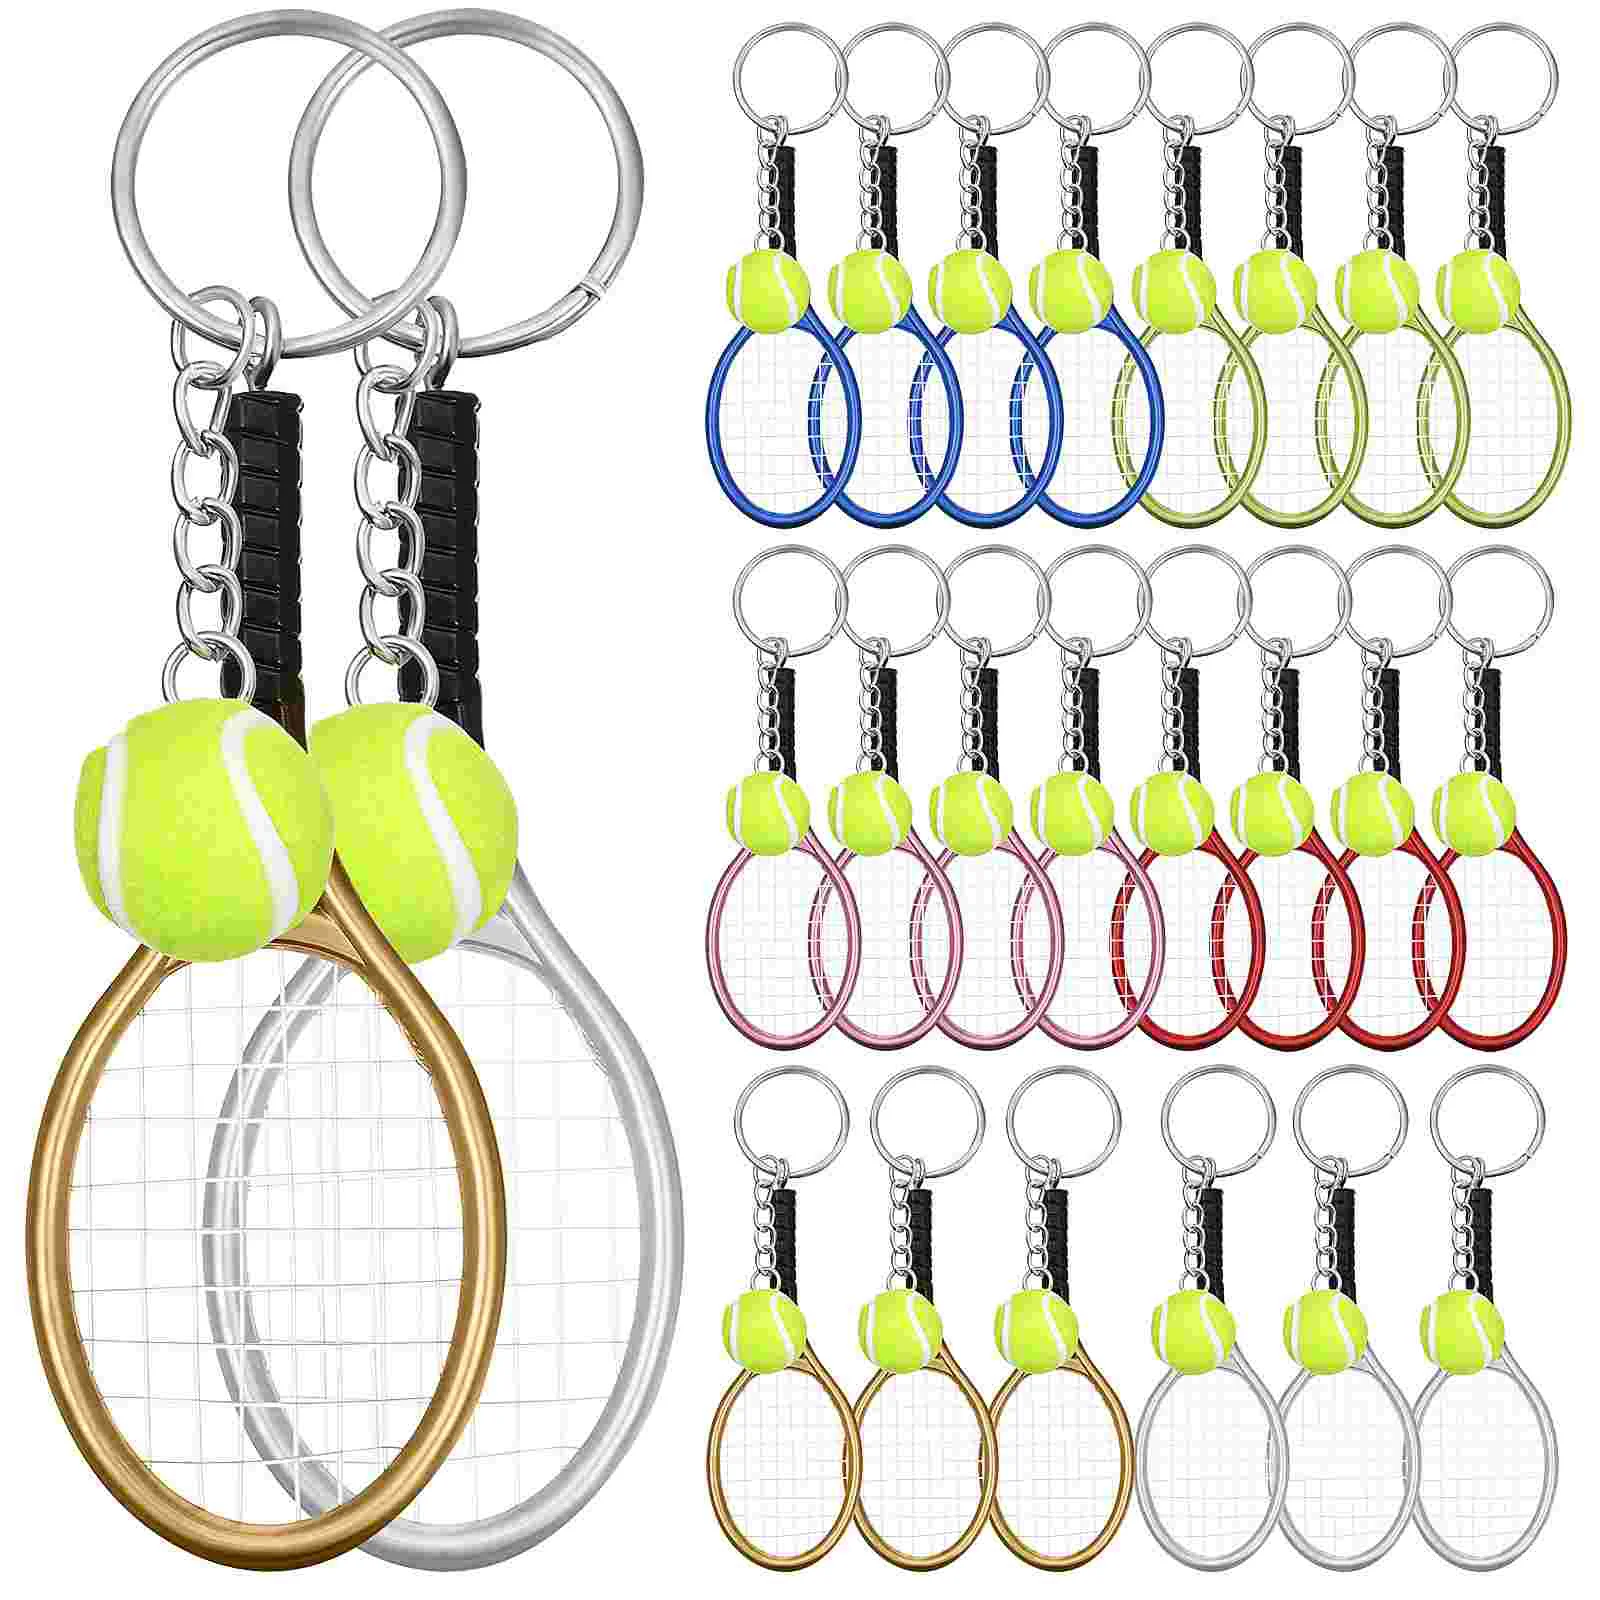 

24 Pcs Key Chain Tennis Ring Holder Decorative Keychain The Gift Racket Pendant Fob